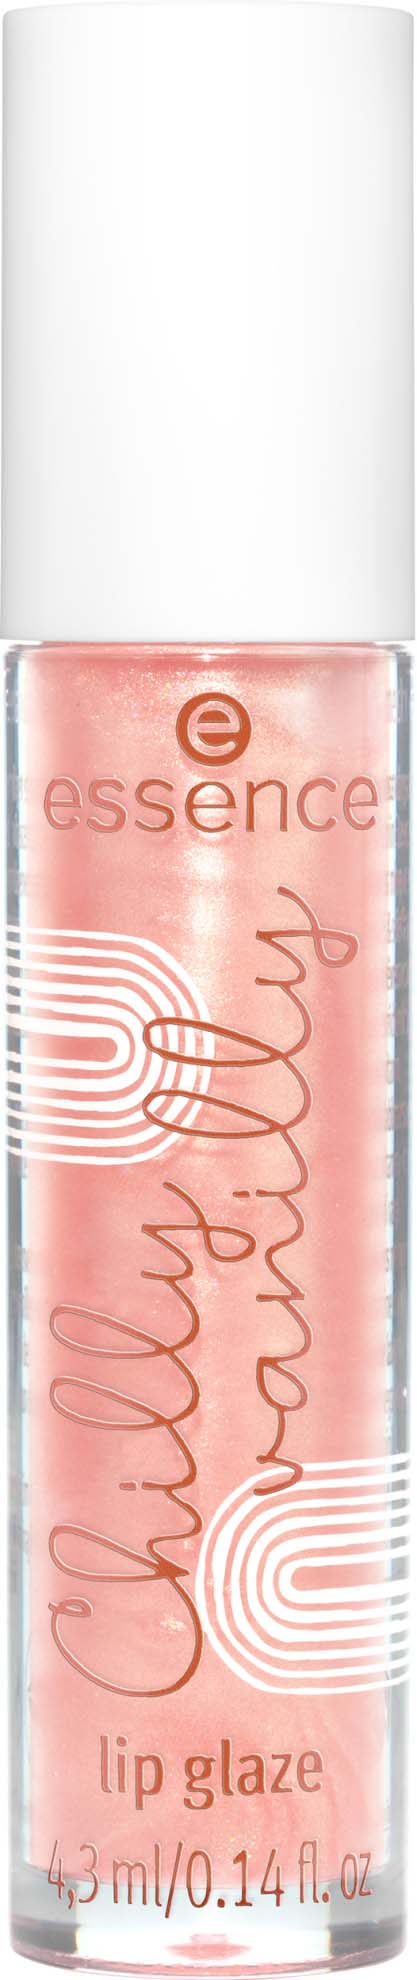 essence Chilly Vanilly Lip Glaze✨ #essencecosmetics